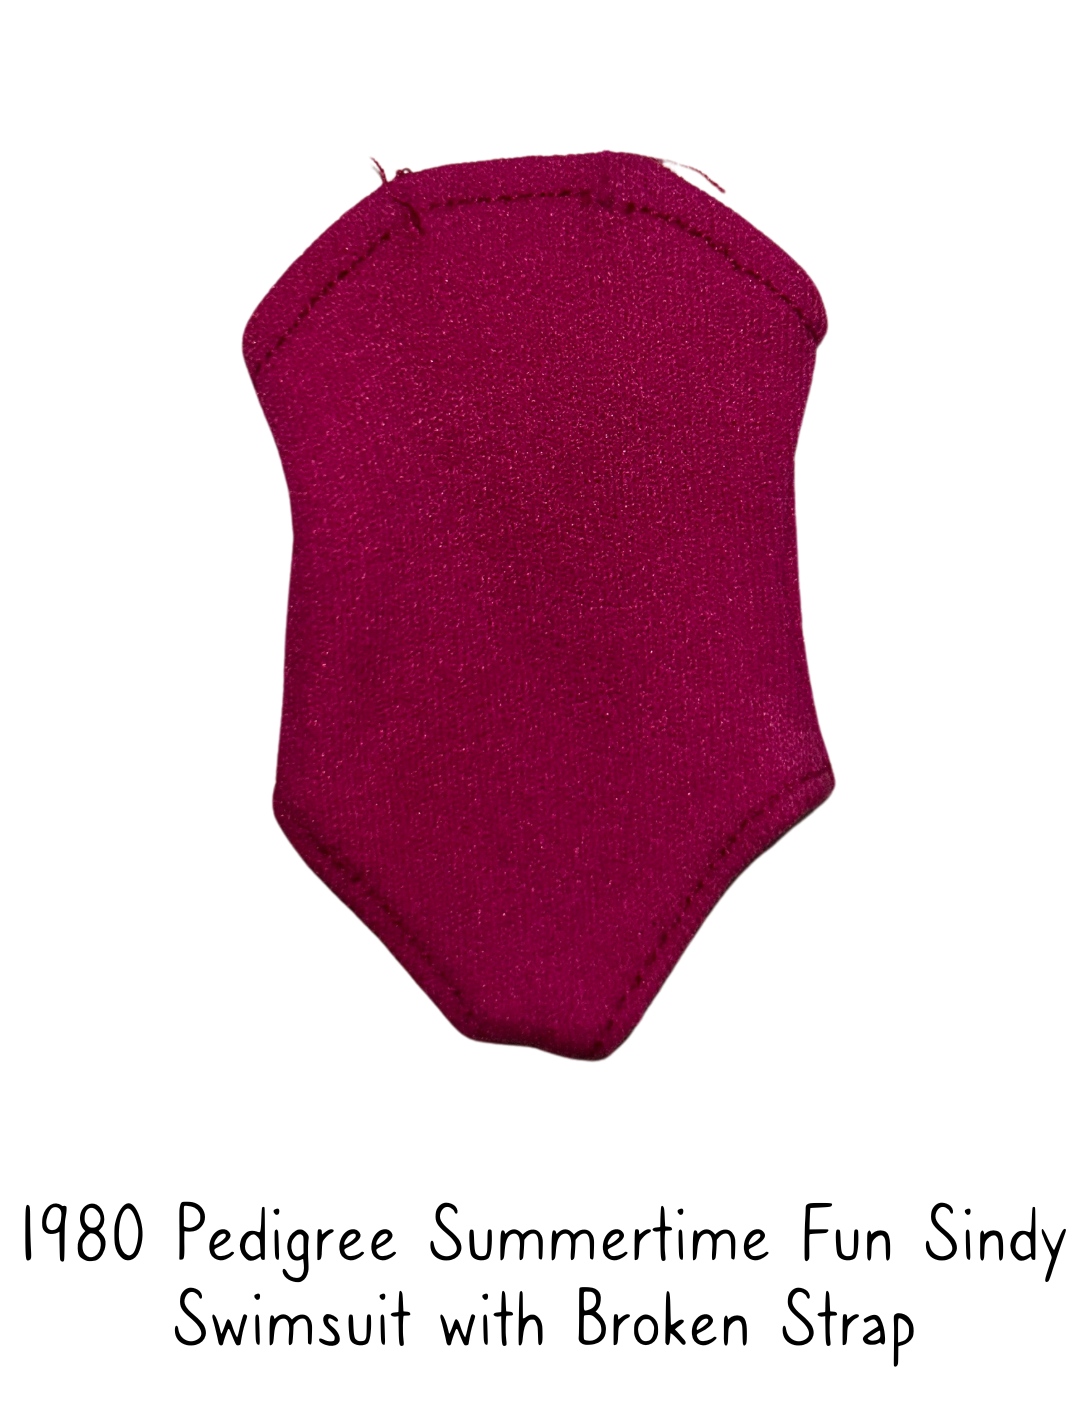 1980 Pedigree Summertime Fun Sindy Swimsuit with Broken Straps